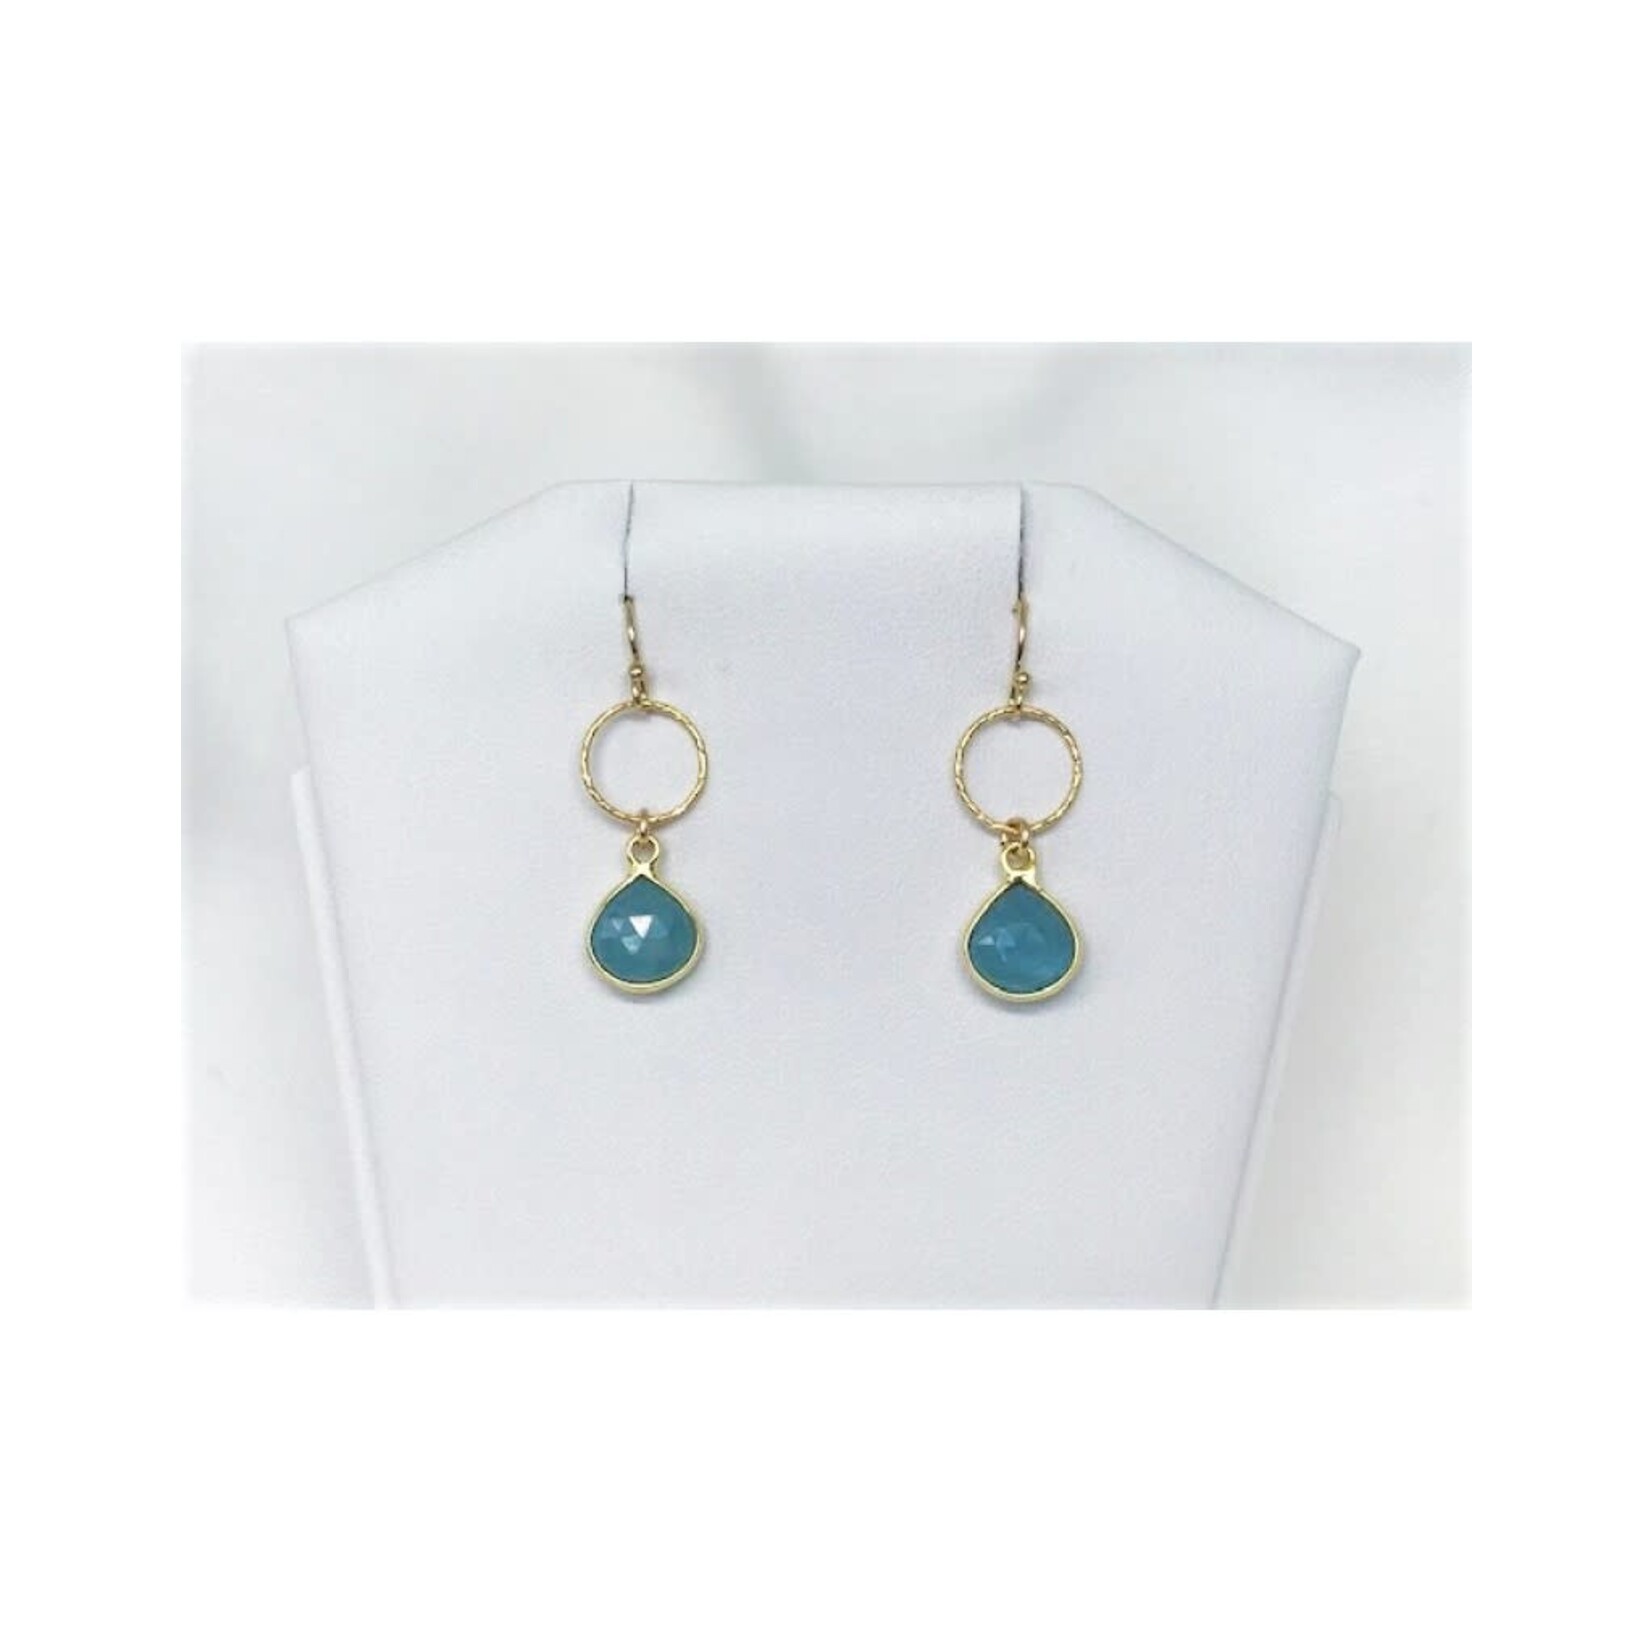 French Hook Earrings - Aquamarine/Gold/Sm Circle